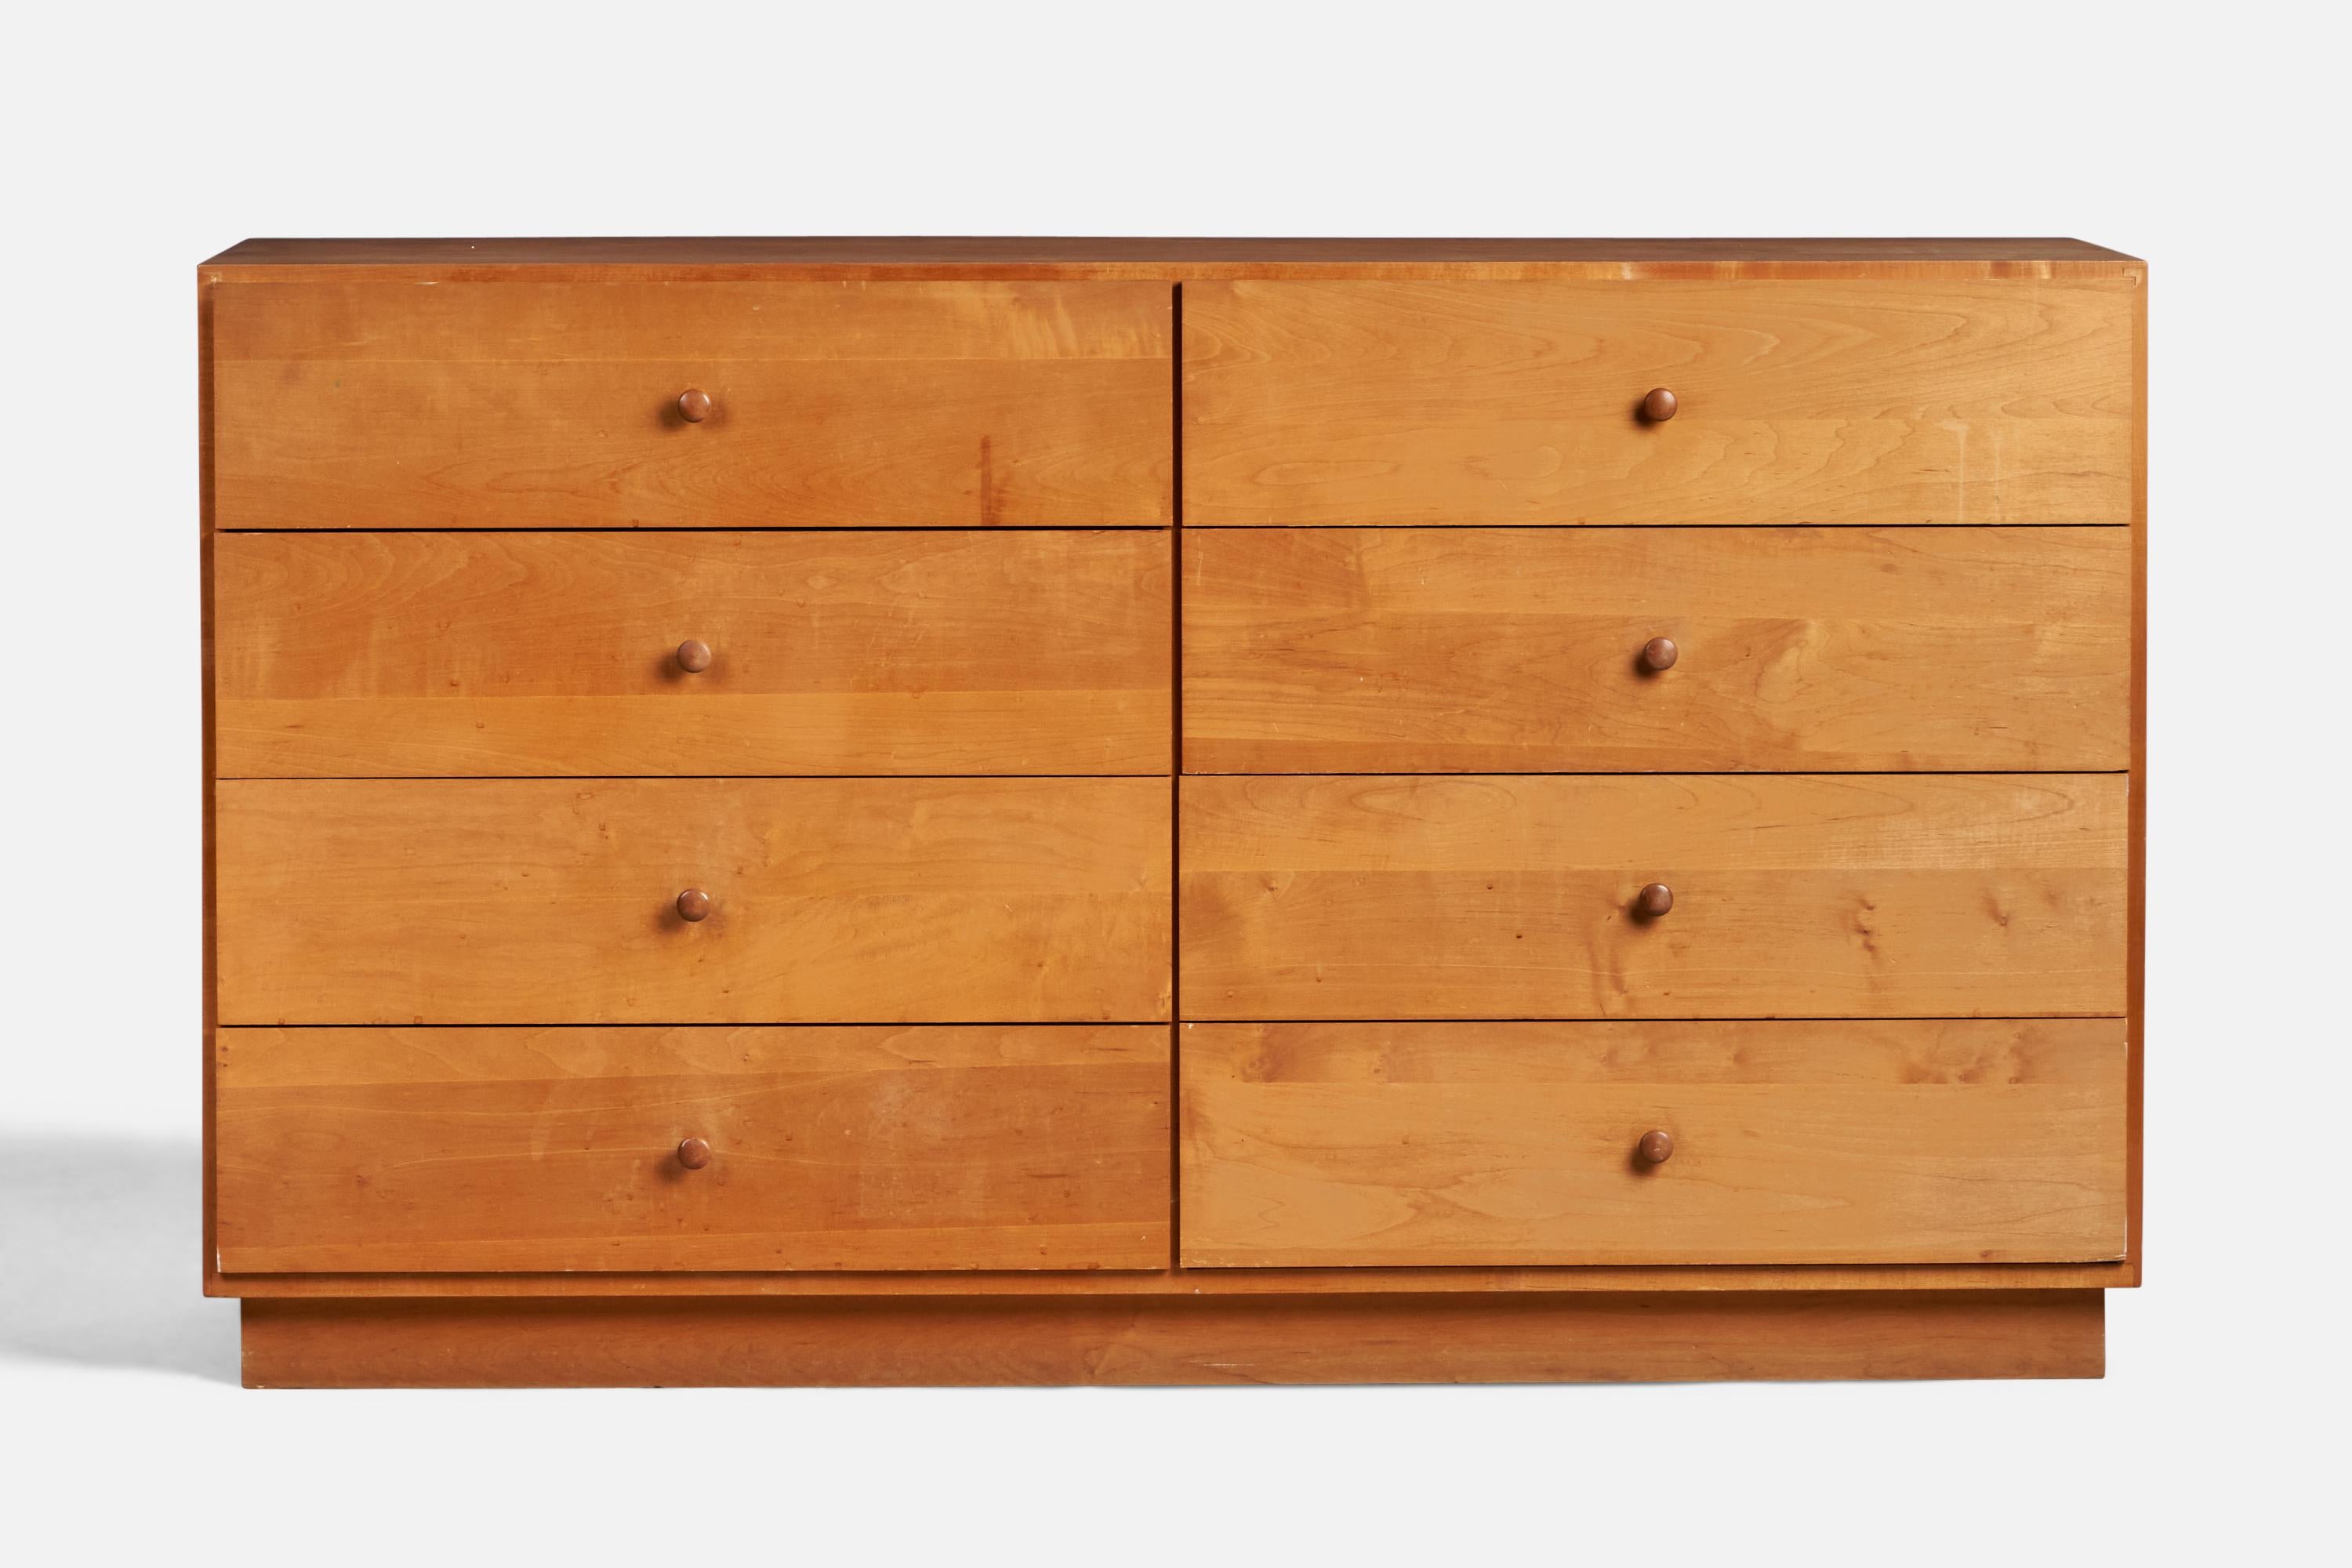 A maple dresser designed and produced in North Carolina, USA, c. 1970s.